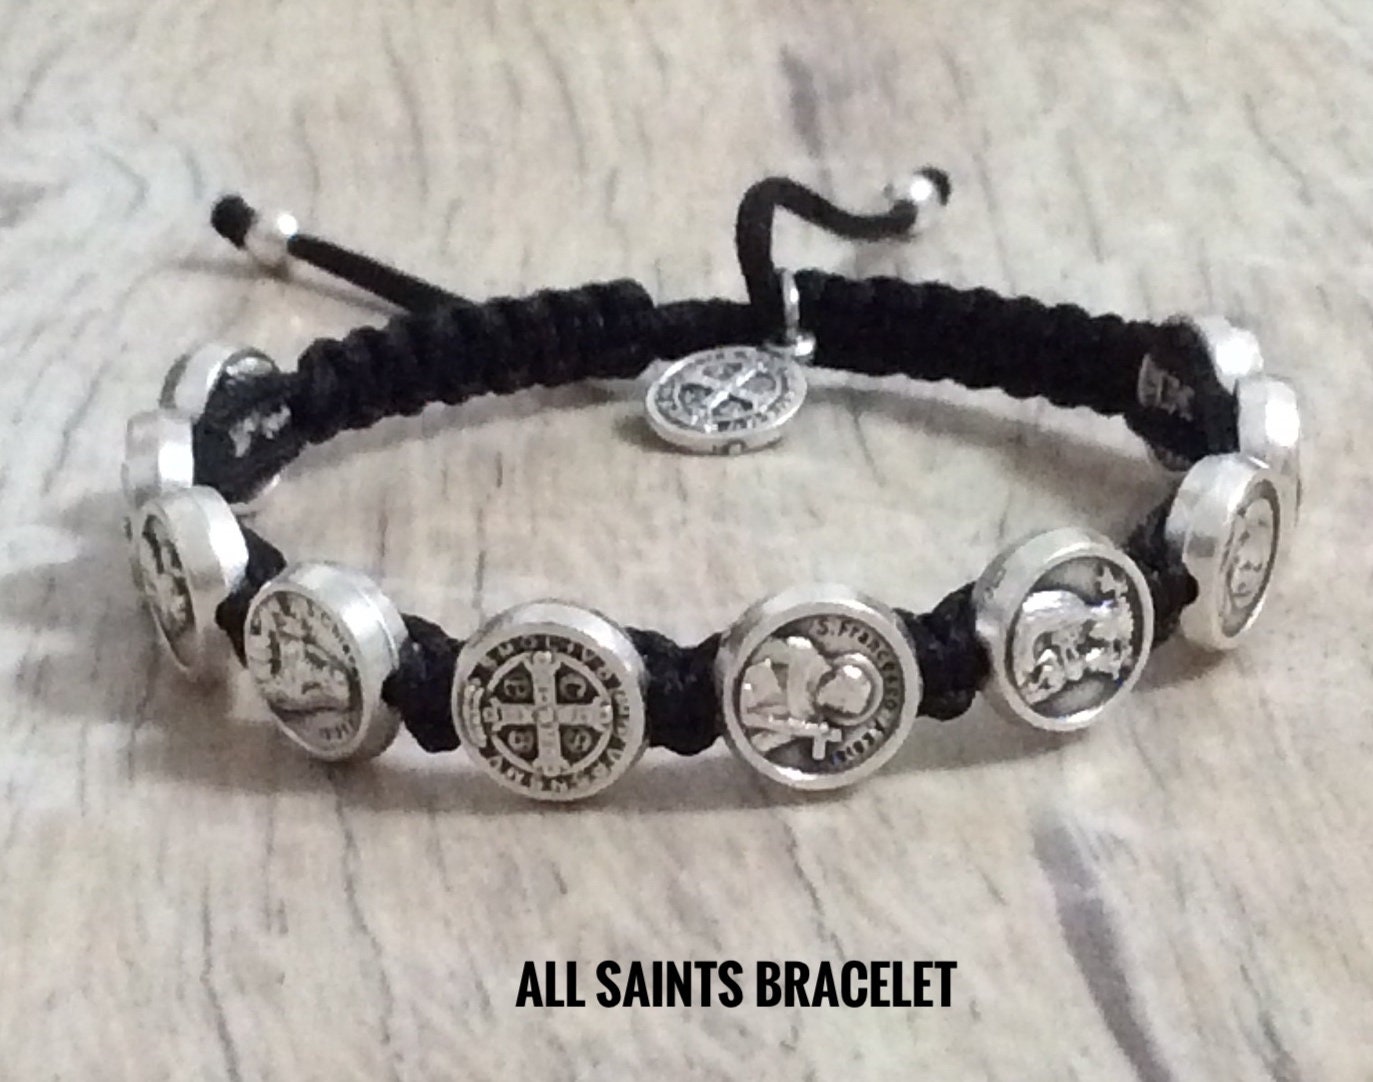 The development and design of All Saints prototype jewellery